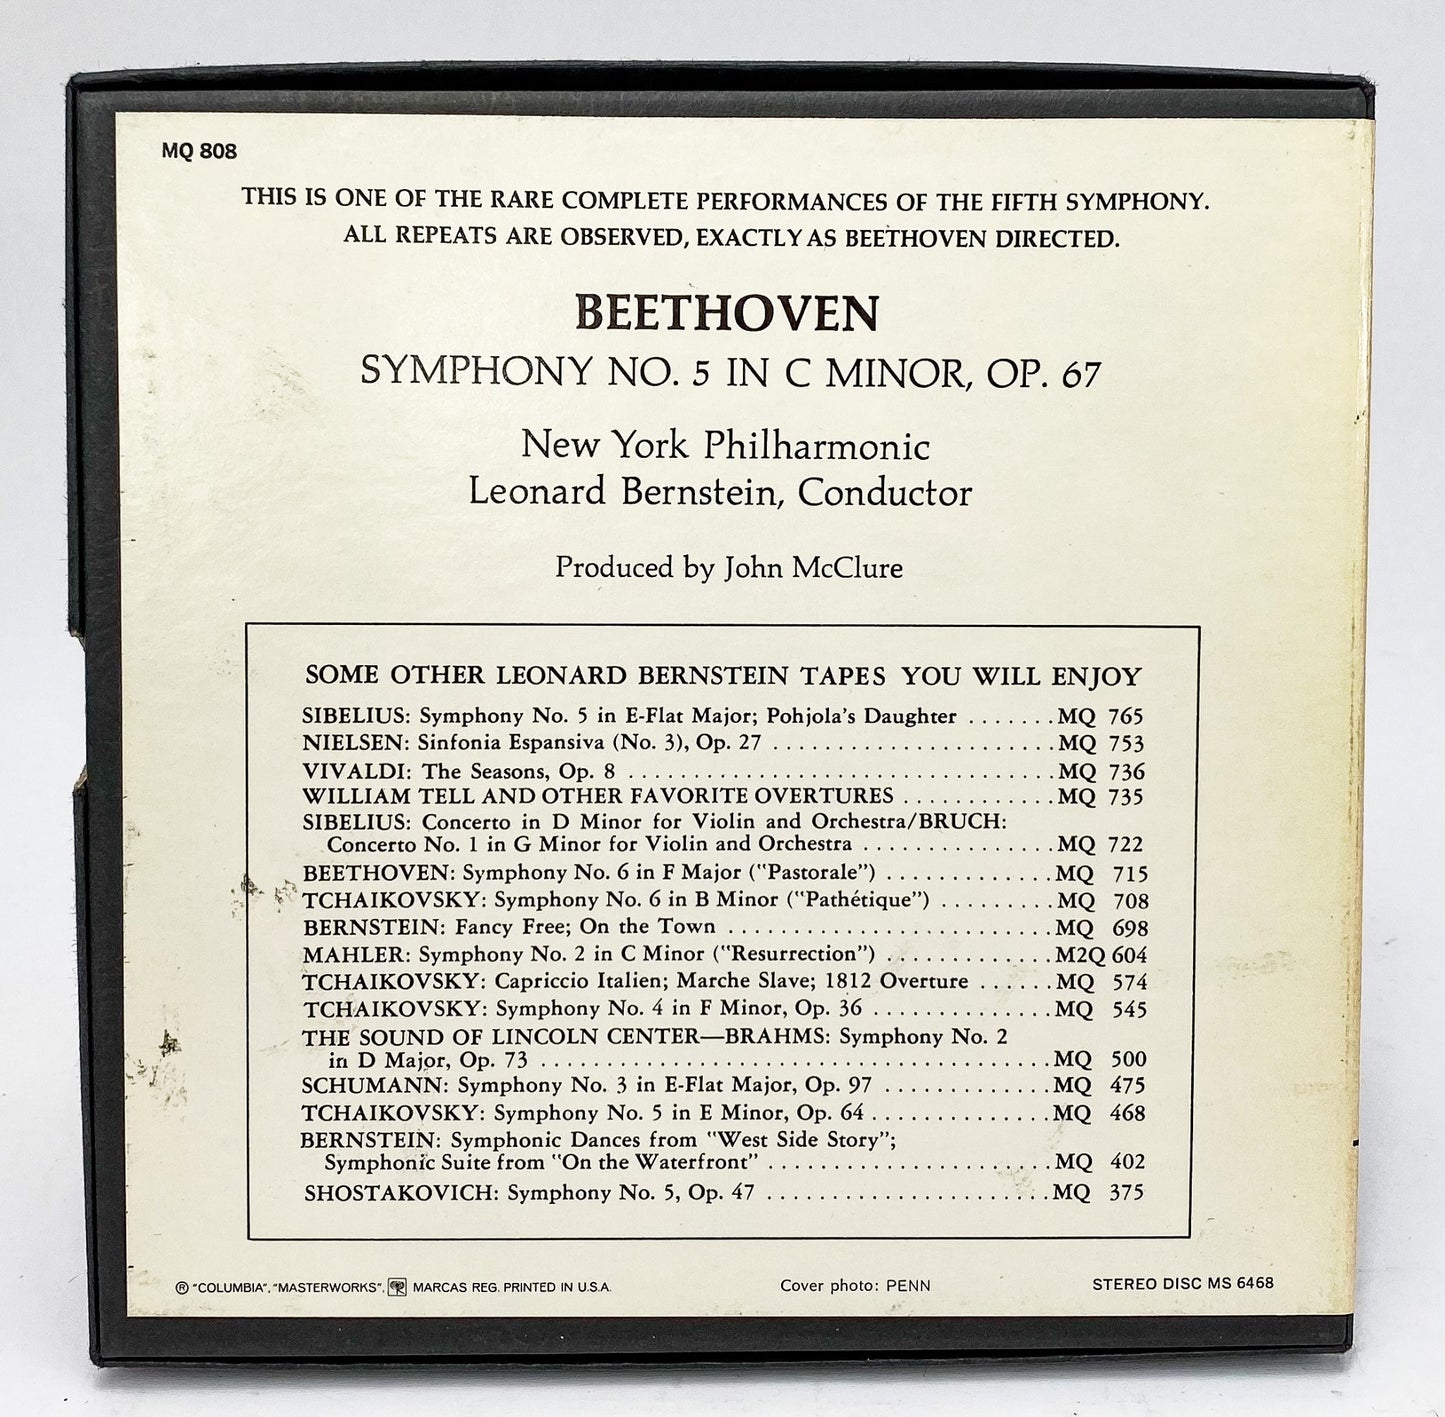 Beethoven Fifth Symphony Bernstein Reel to Reel Tape 7 1/2 IPS Columbia